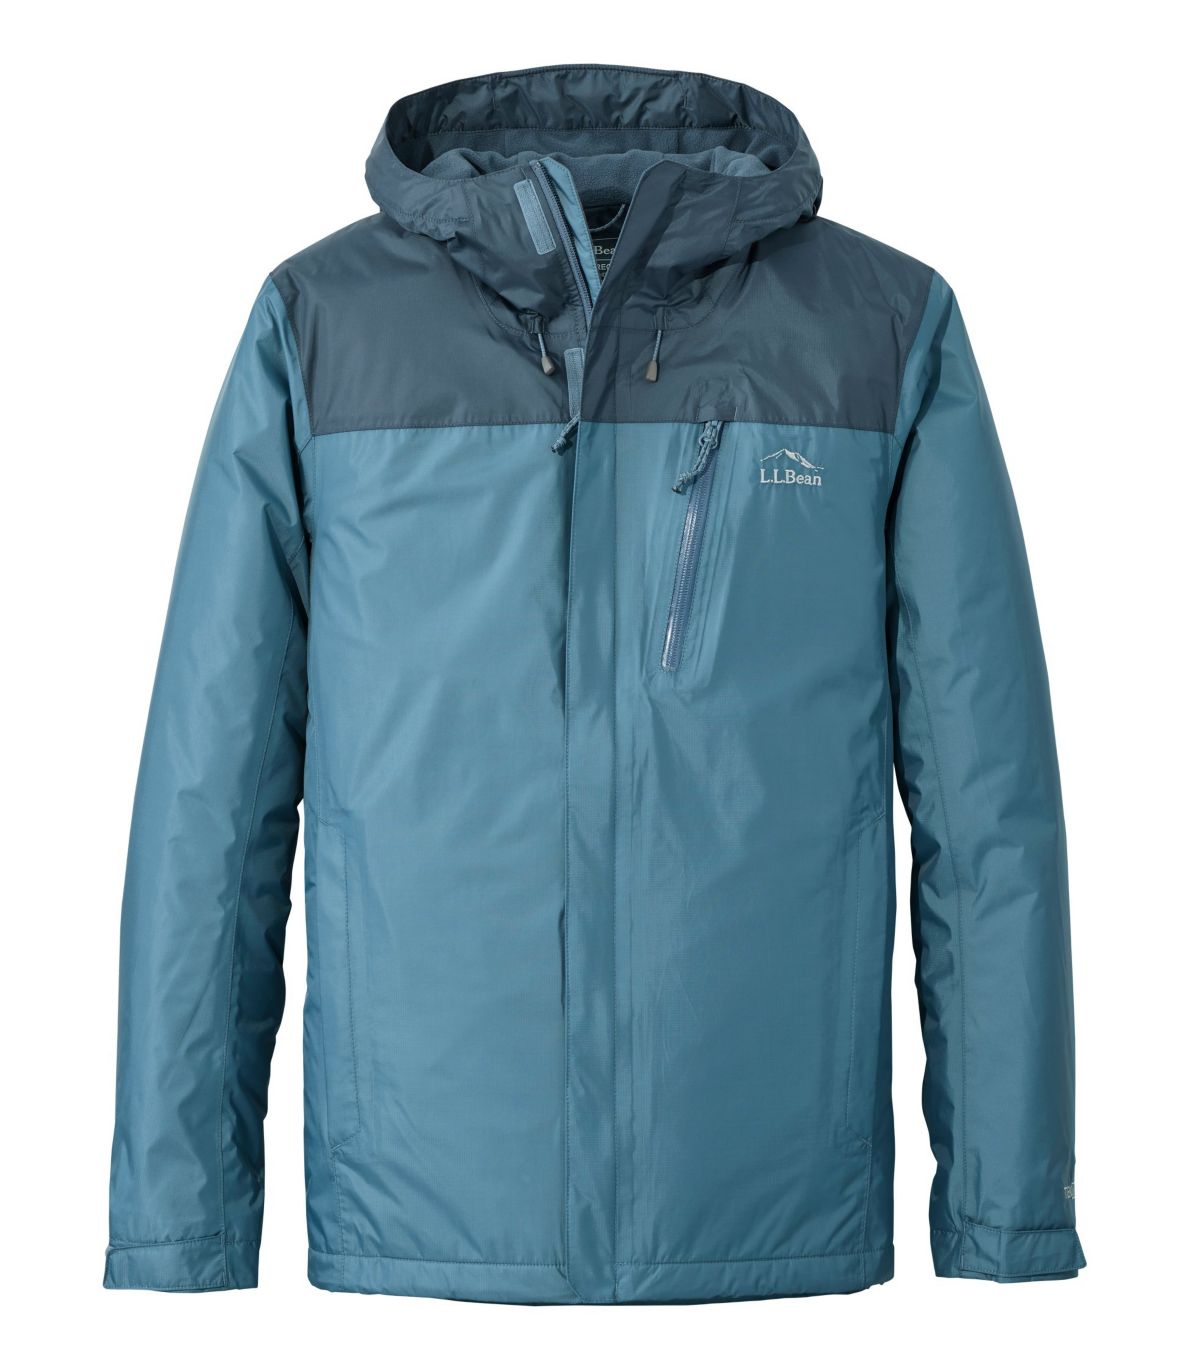 Men's Trail Model Rain Jacket, Fleece-Lined, Colorblock at L.L. Bean